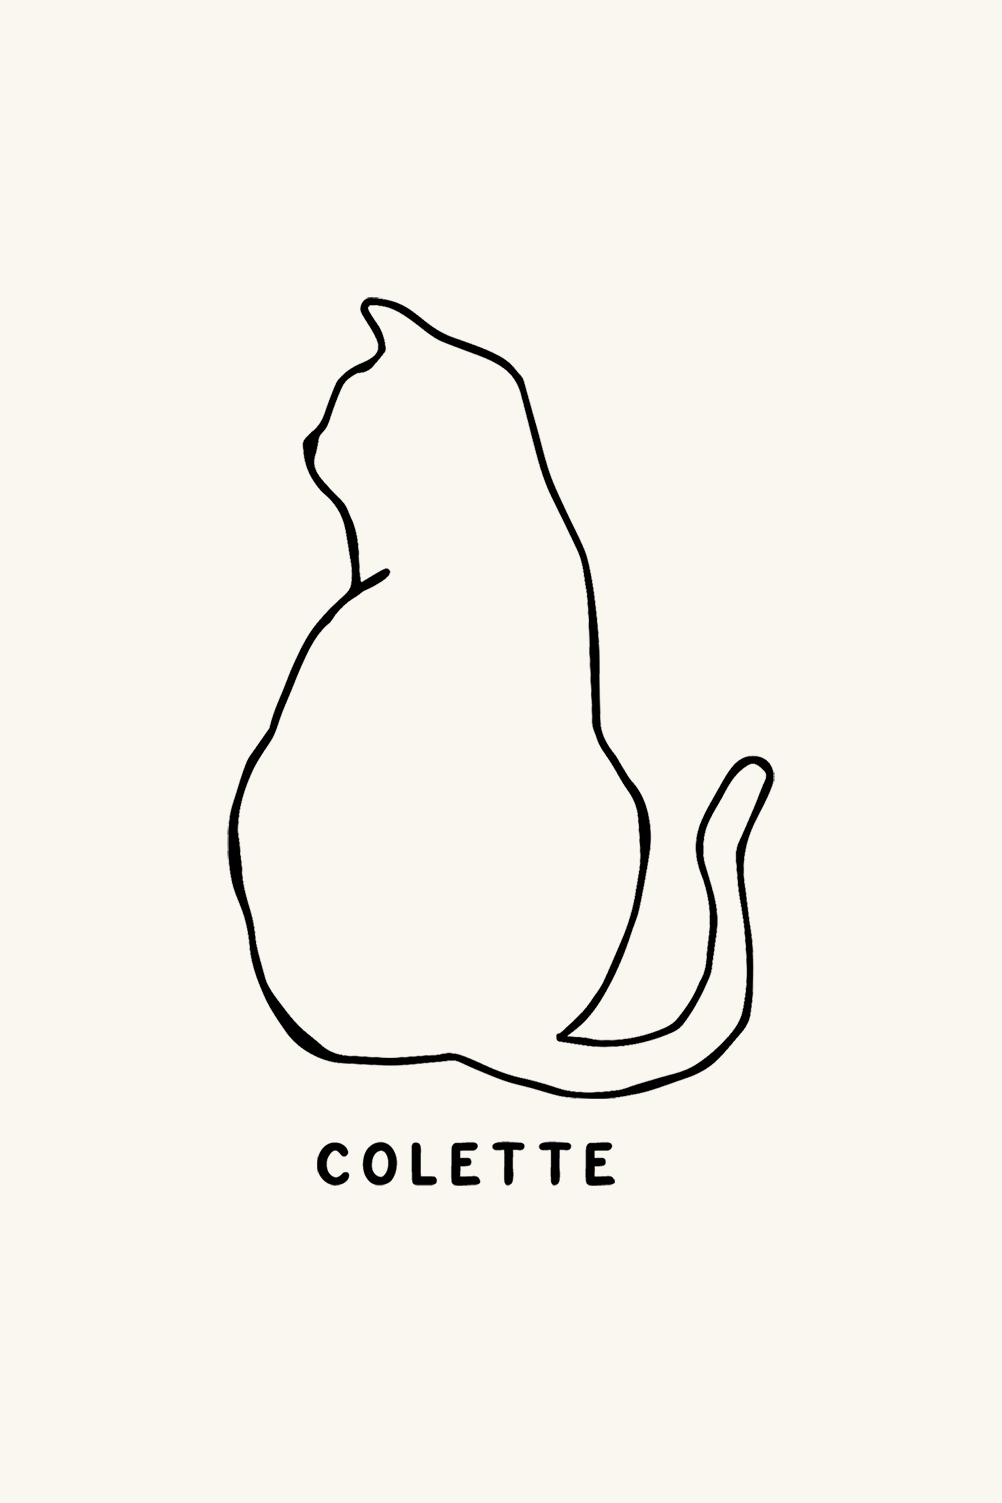 Dibujo de un gato sentado de espaldas